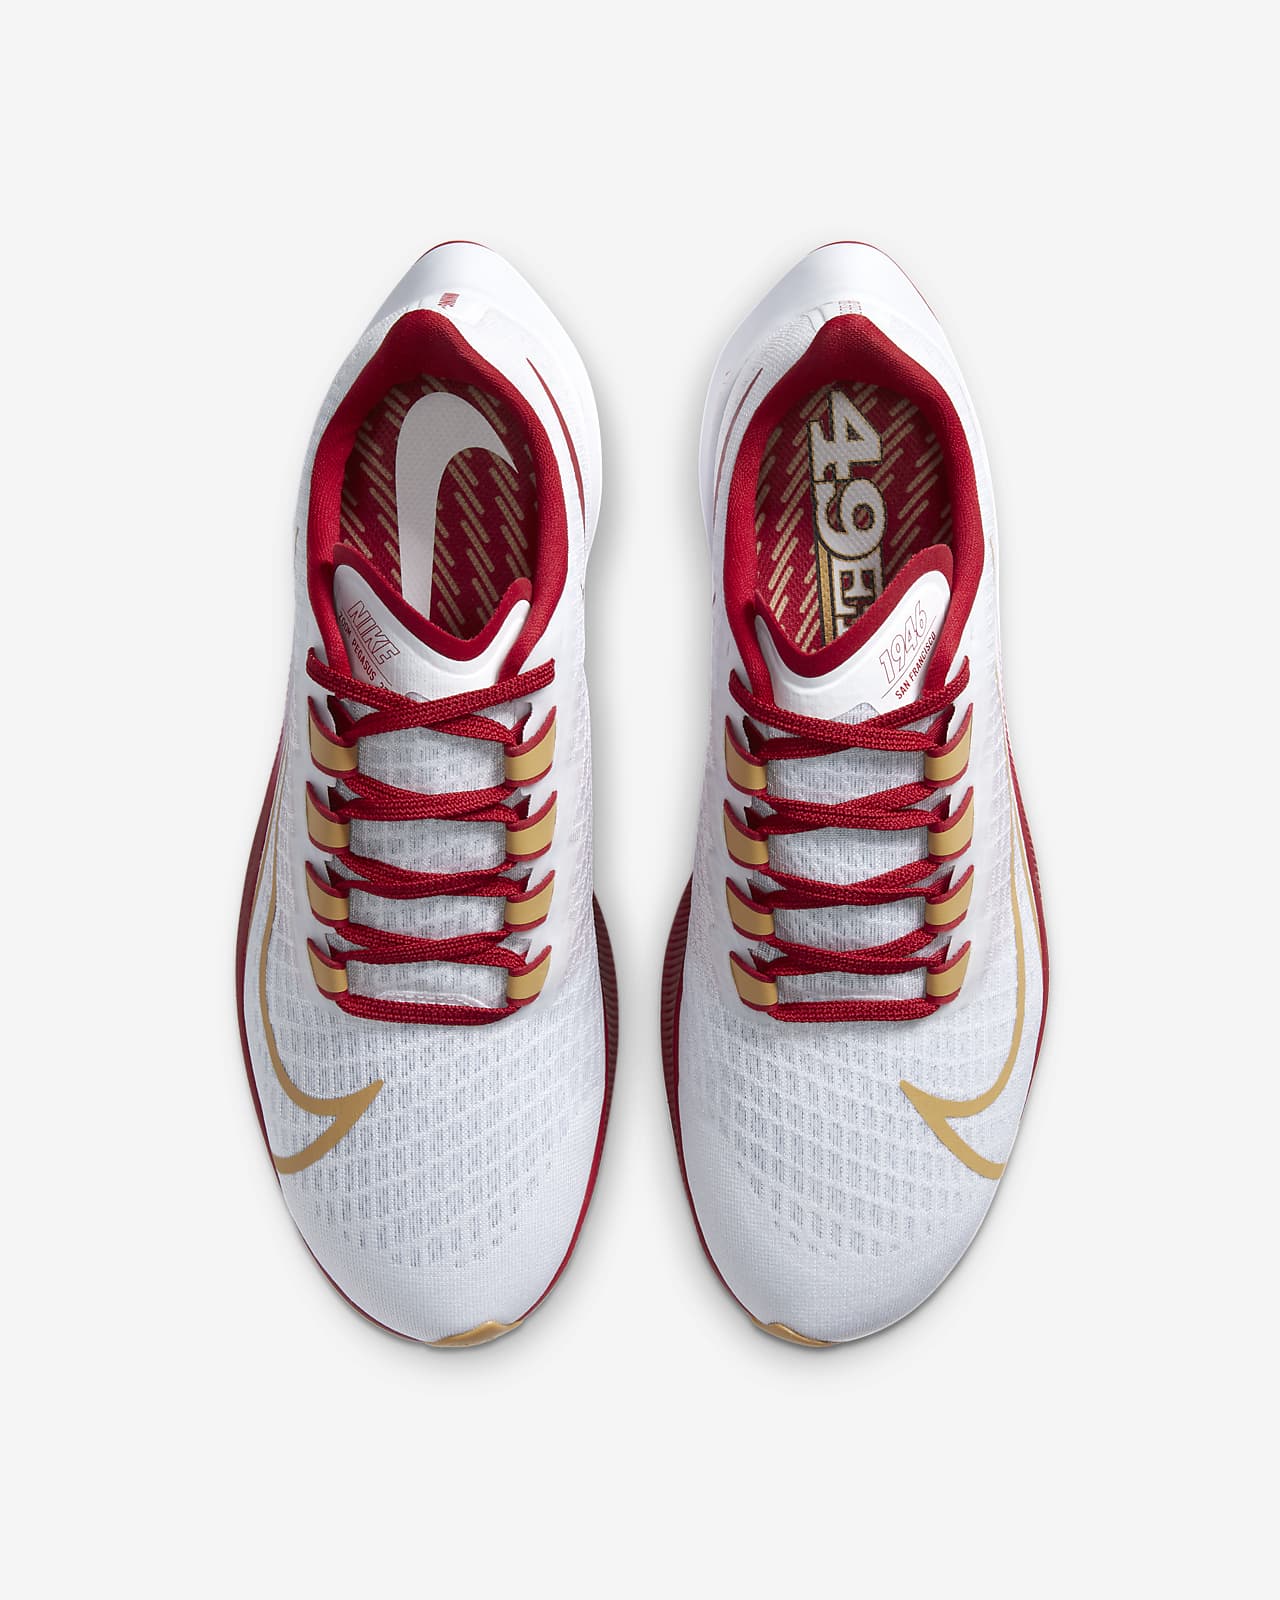 49ers pegasus shoes